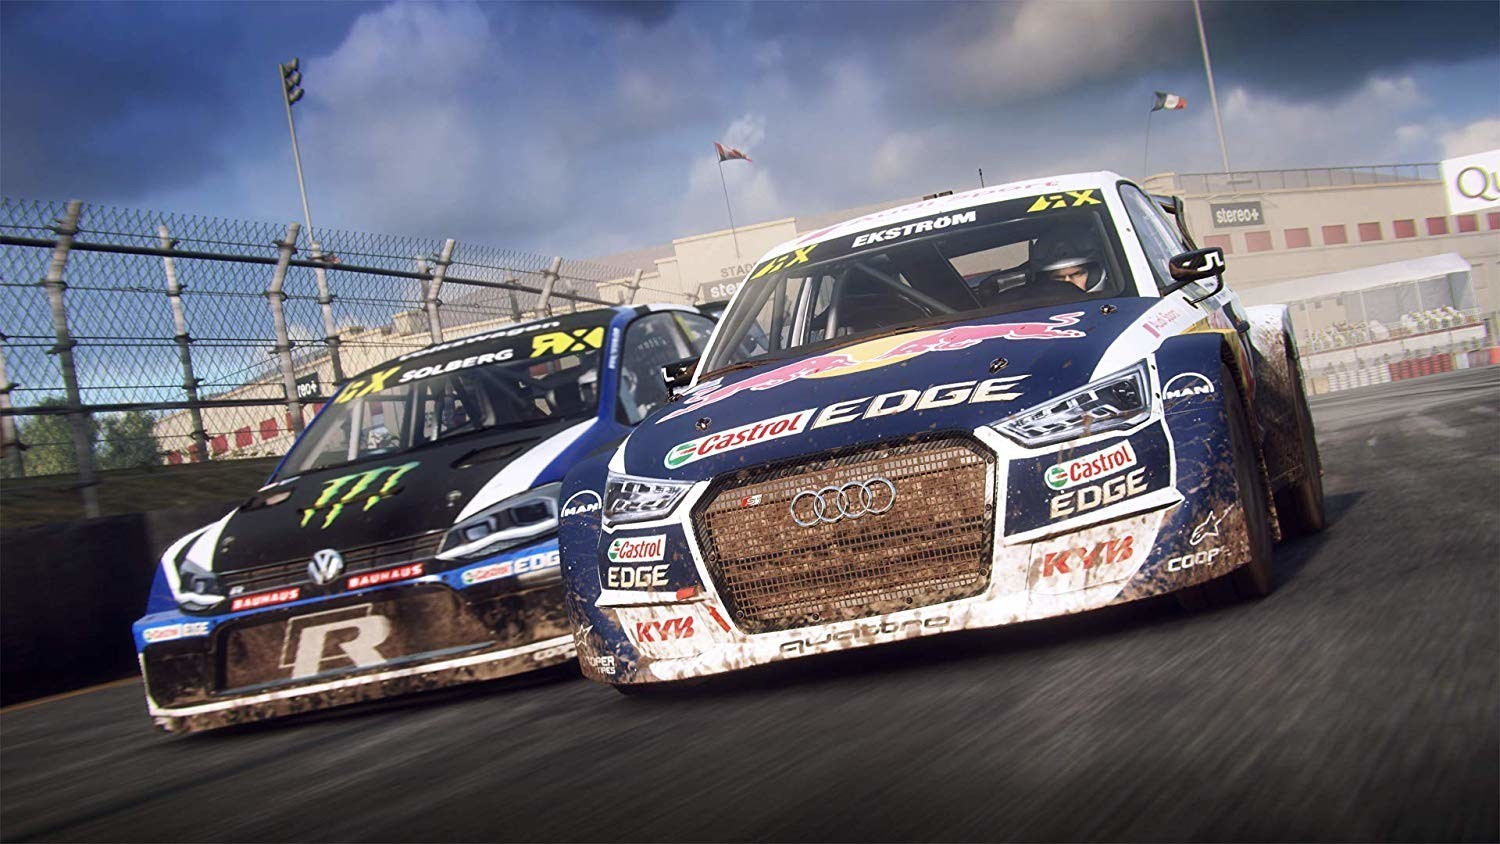 Kaufe DiRT Rally 2.0 Year One Pass PS4 Preisvergleich